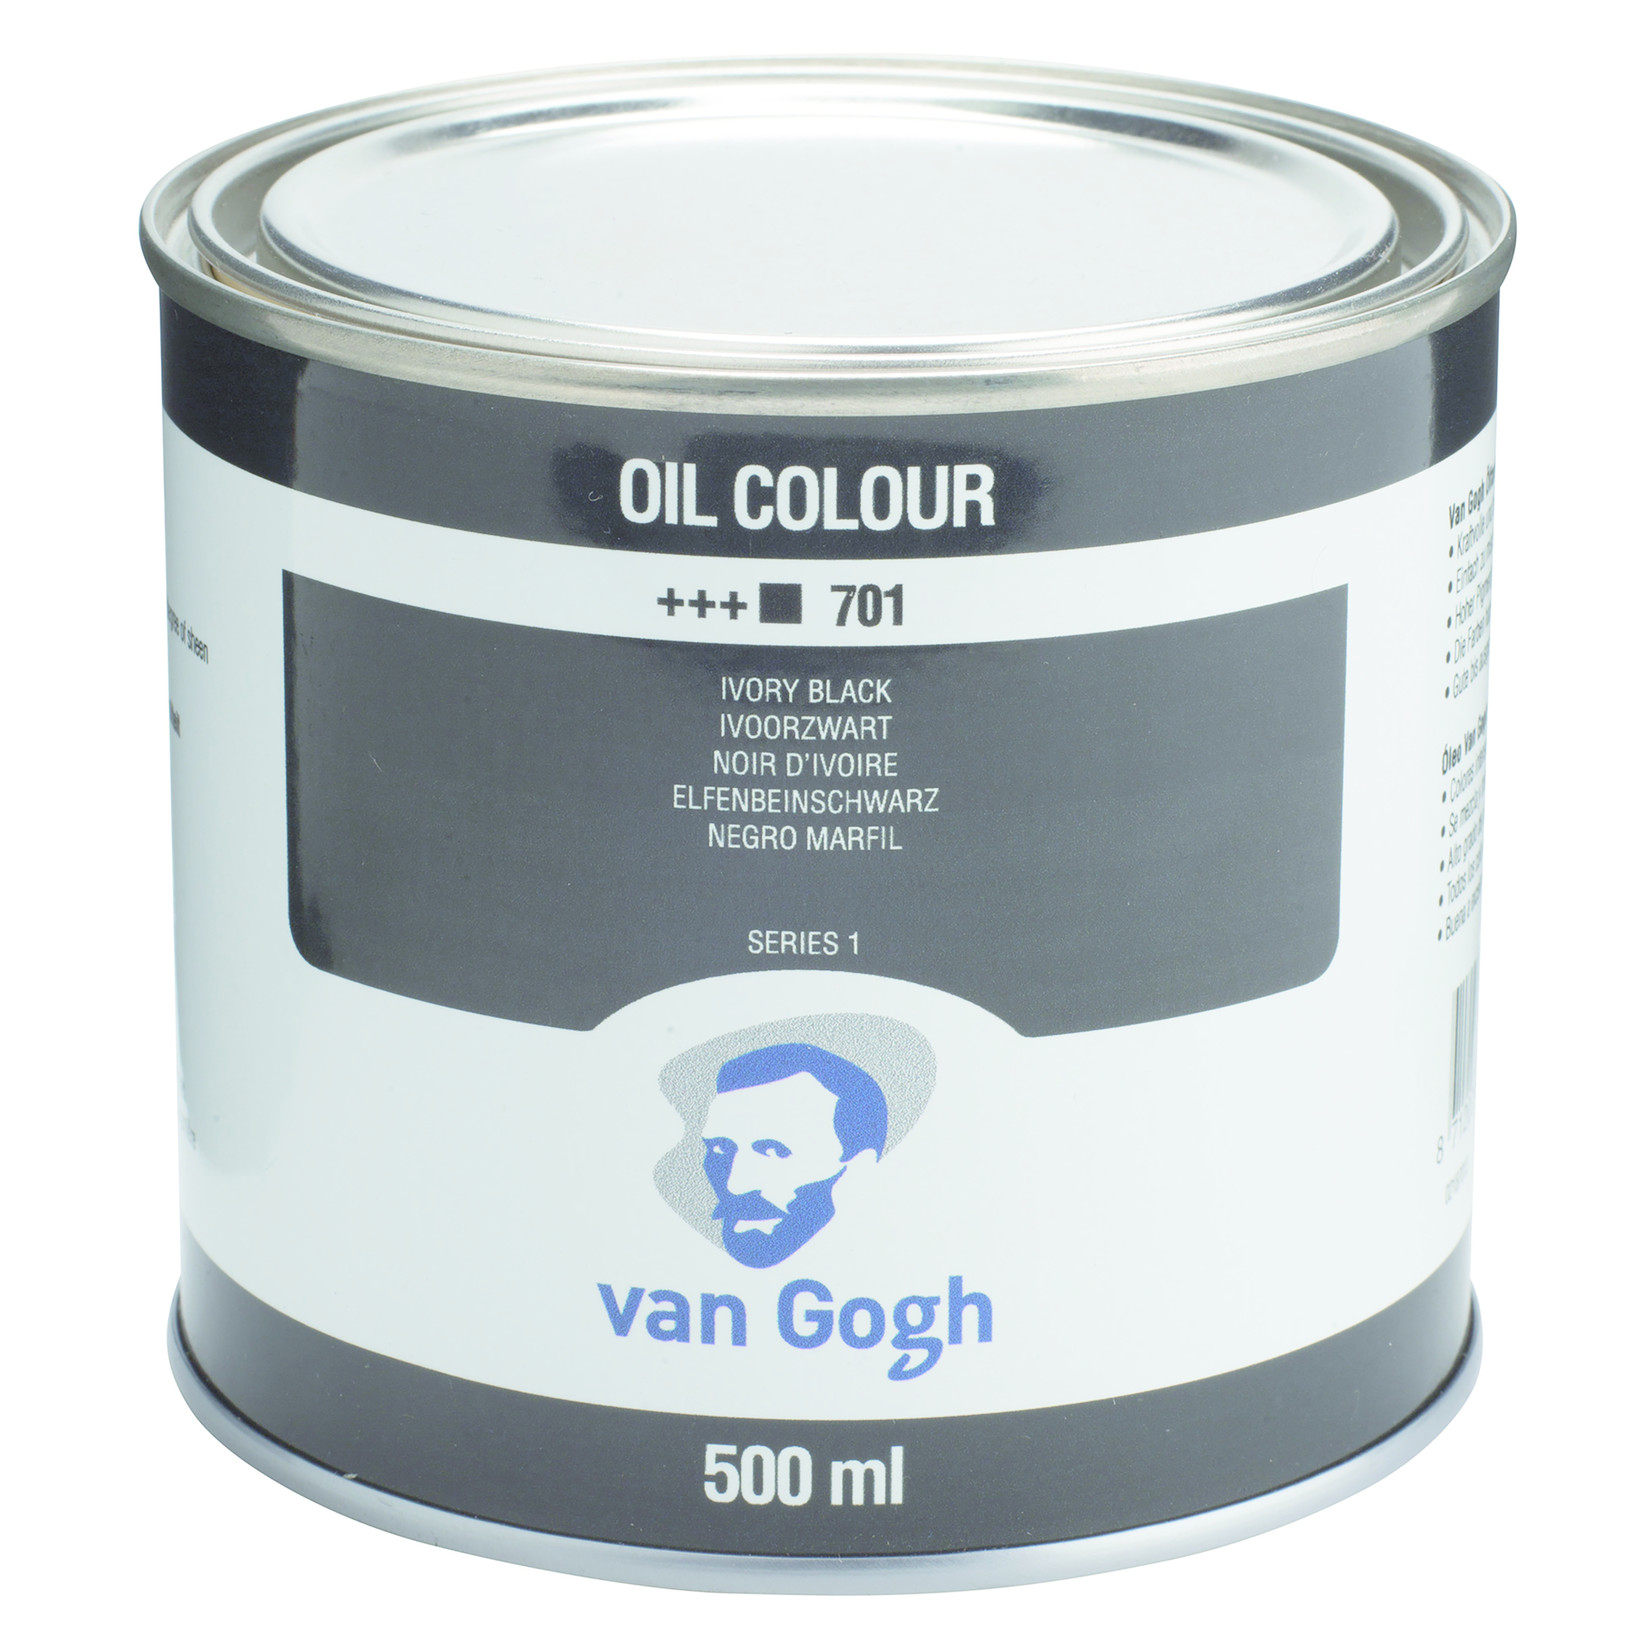 VAN GOGH OIL 500ML IVORY BLACK